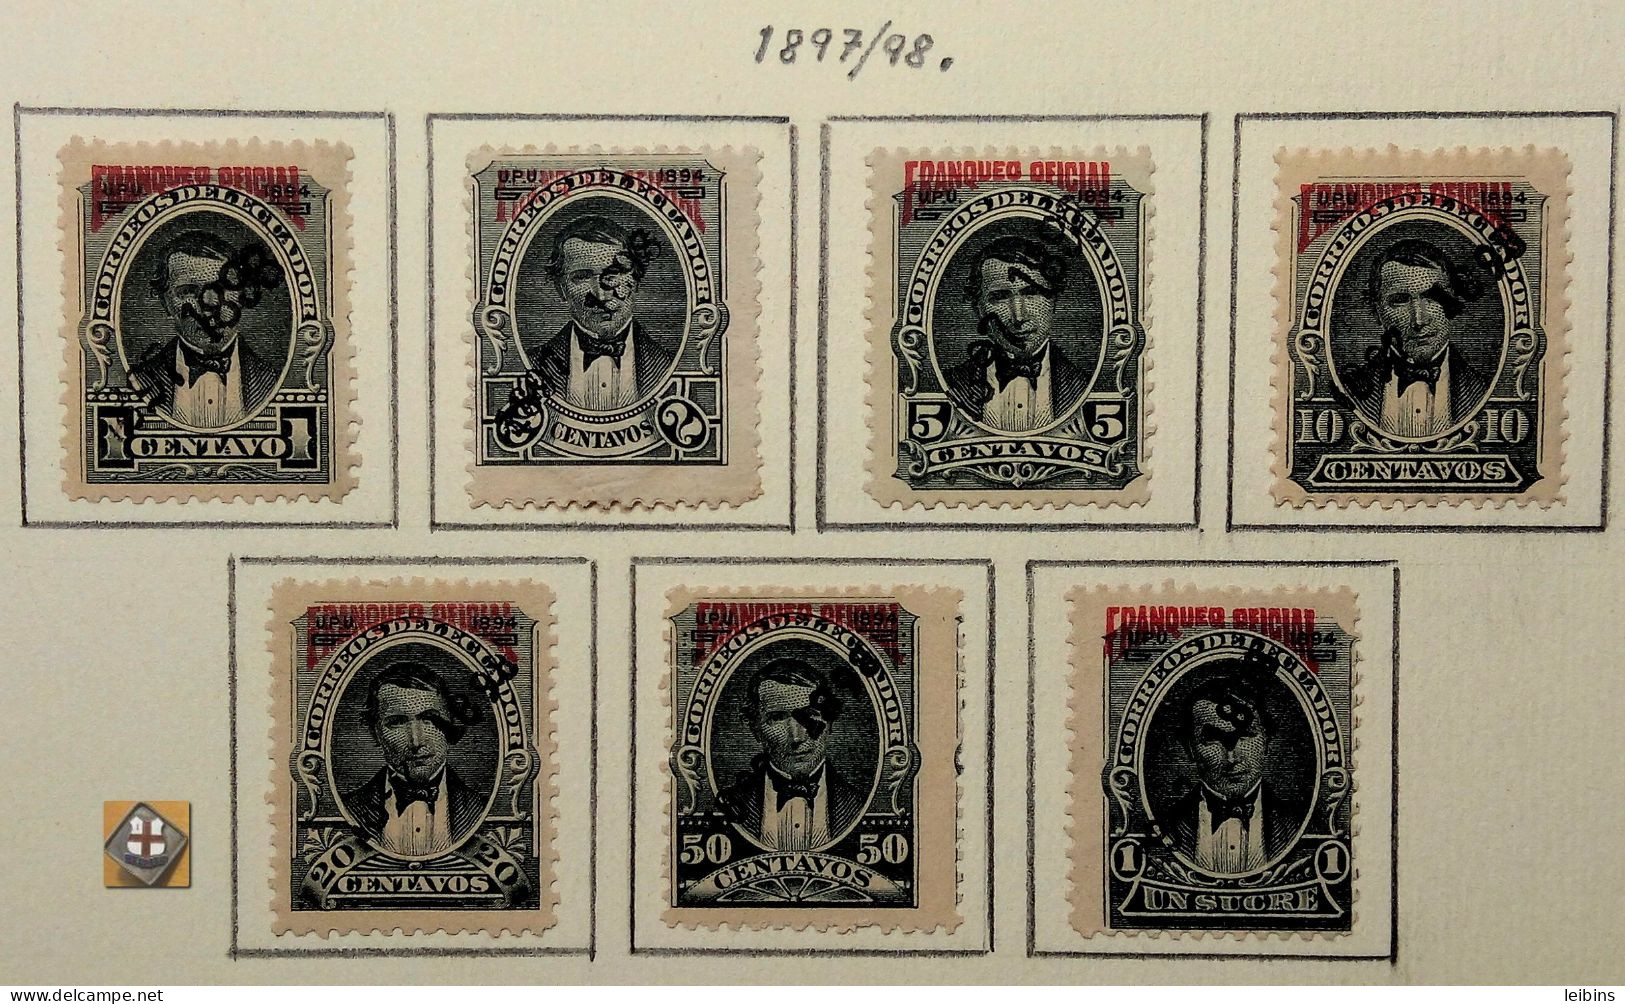 Ecuador, from year 1865 (collection)